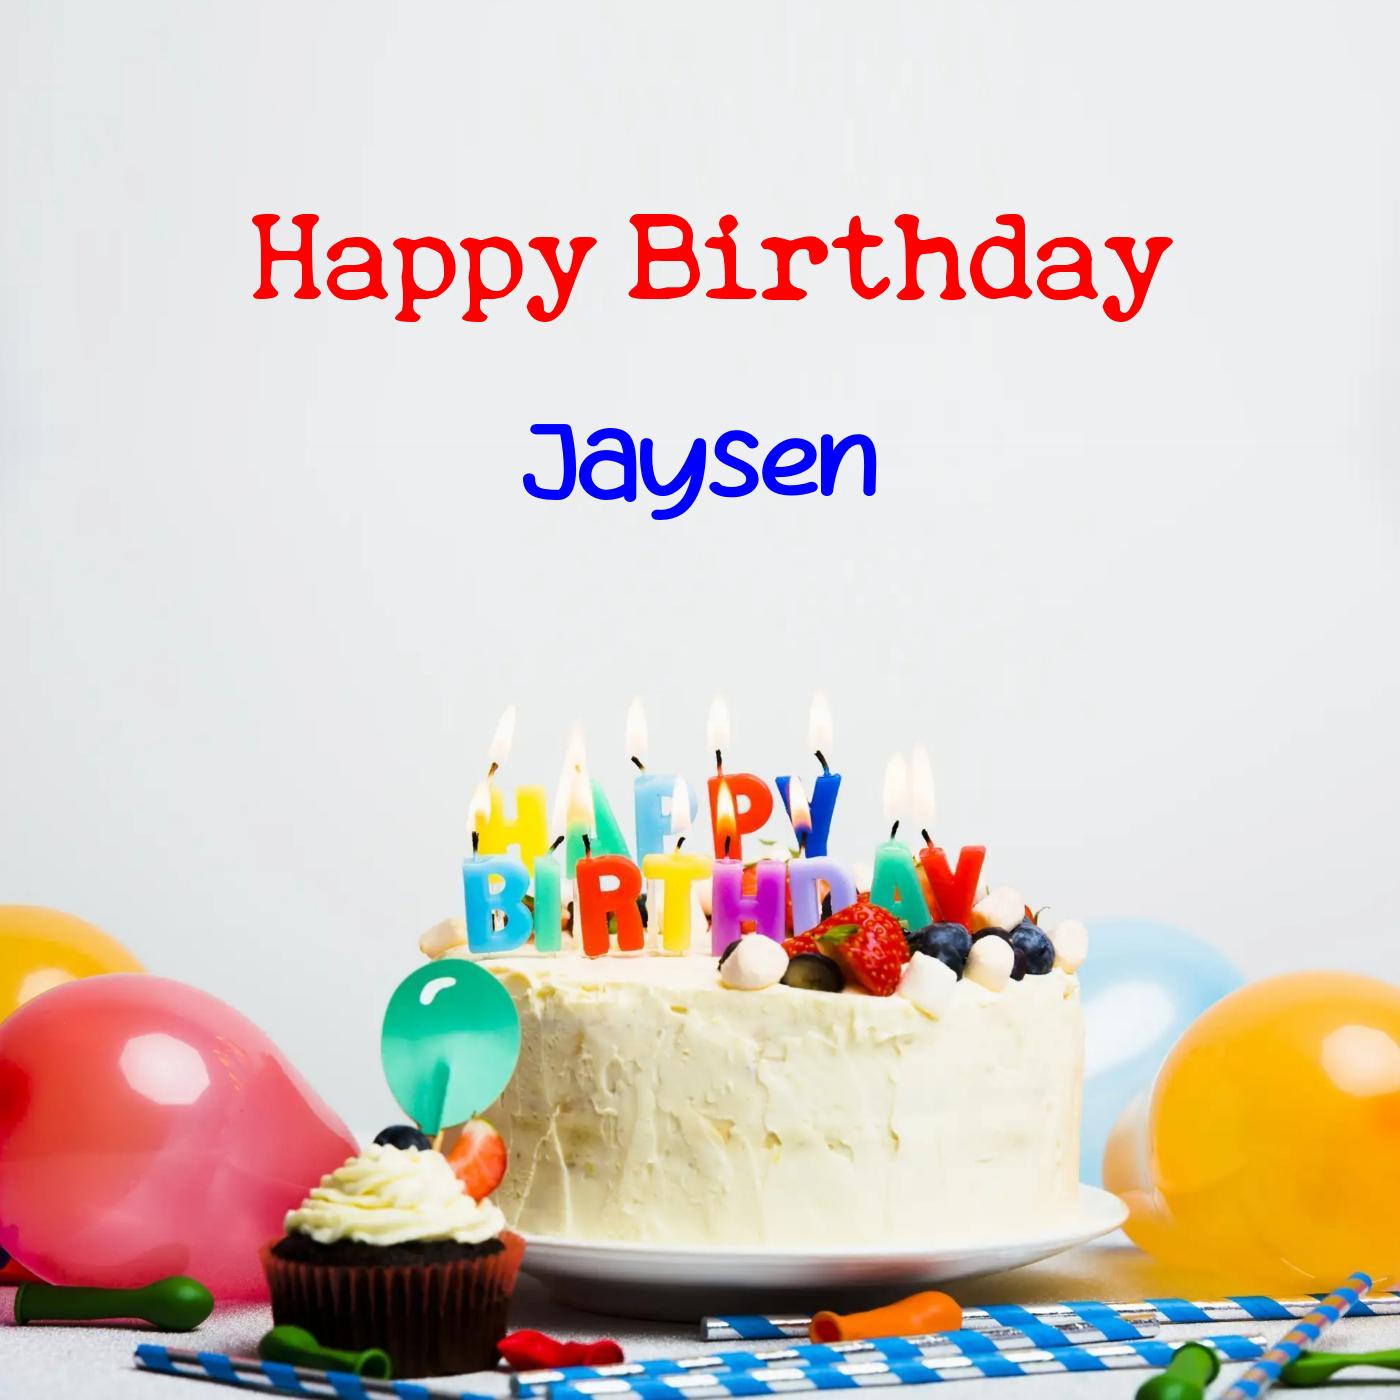 Happy Birthday Jaysen Cake Balloons Card